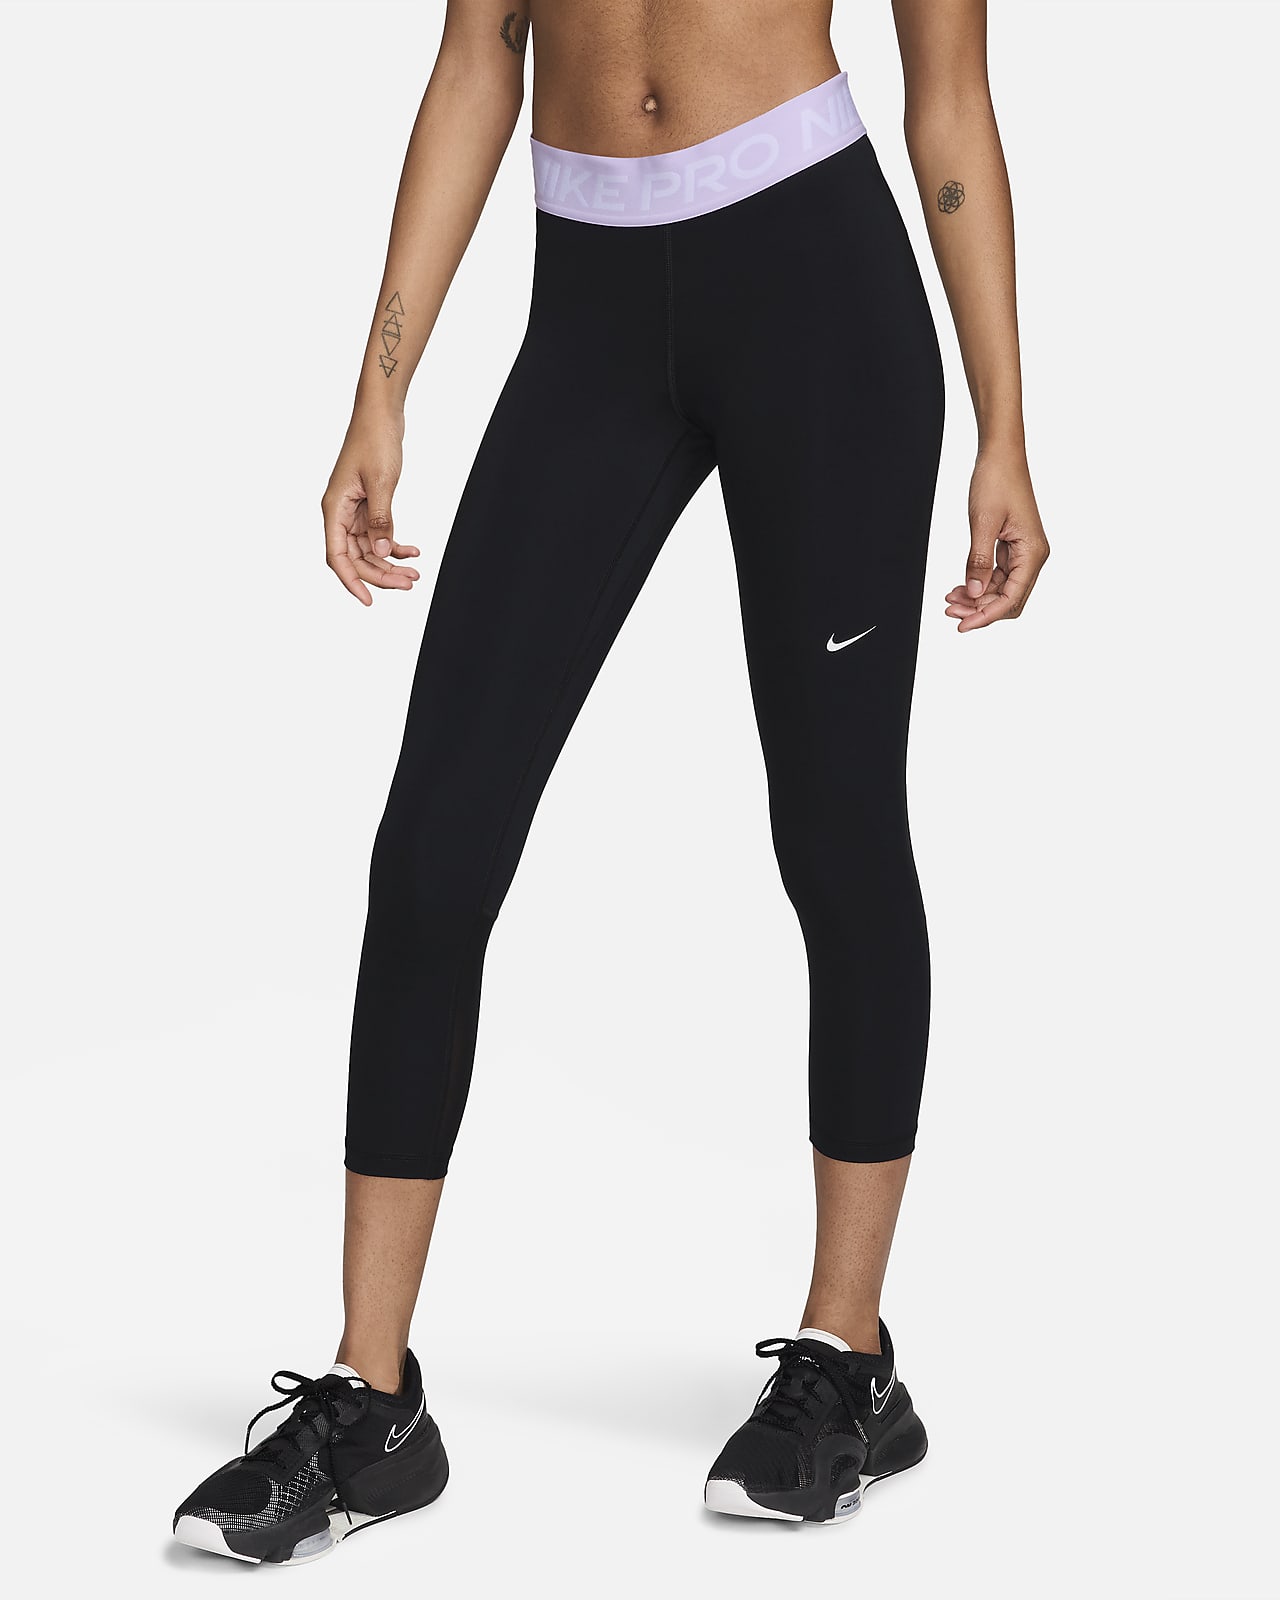 Nike Running Leggings Review - SNEAKER STYLE GUIDE